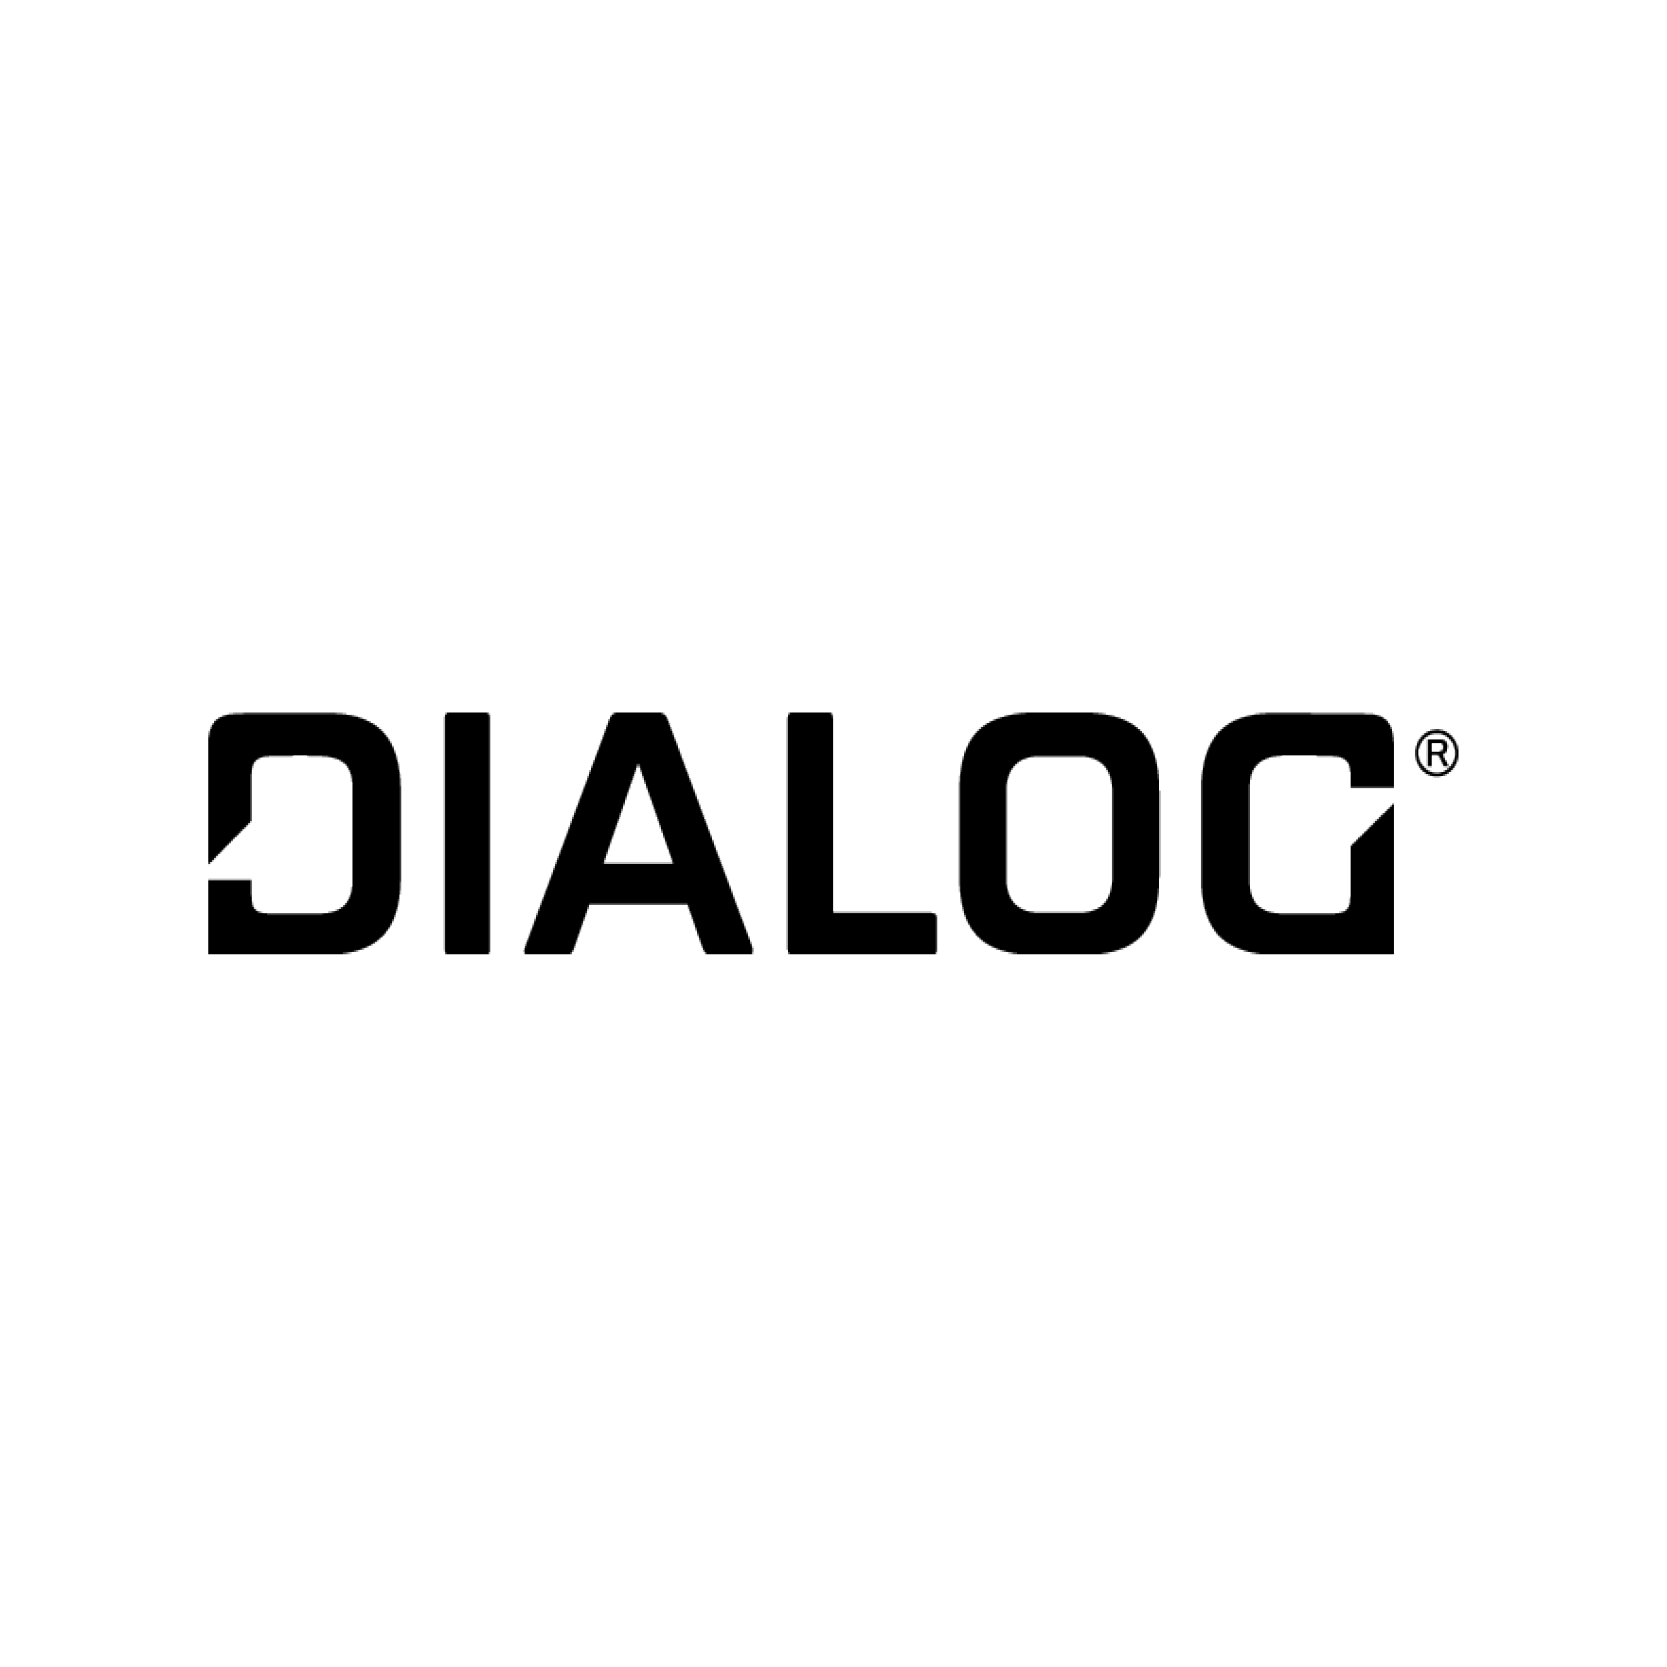 DIALOG logo BW tile 400px.png